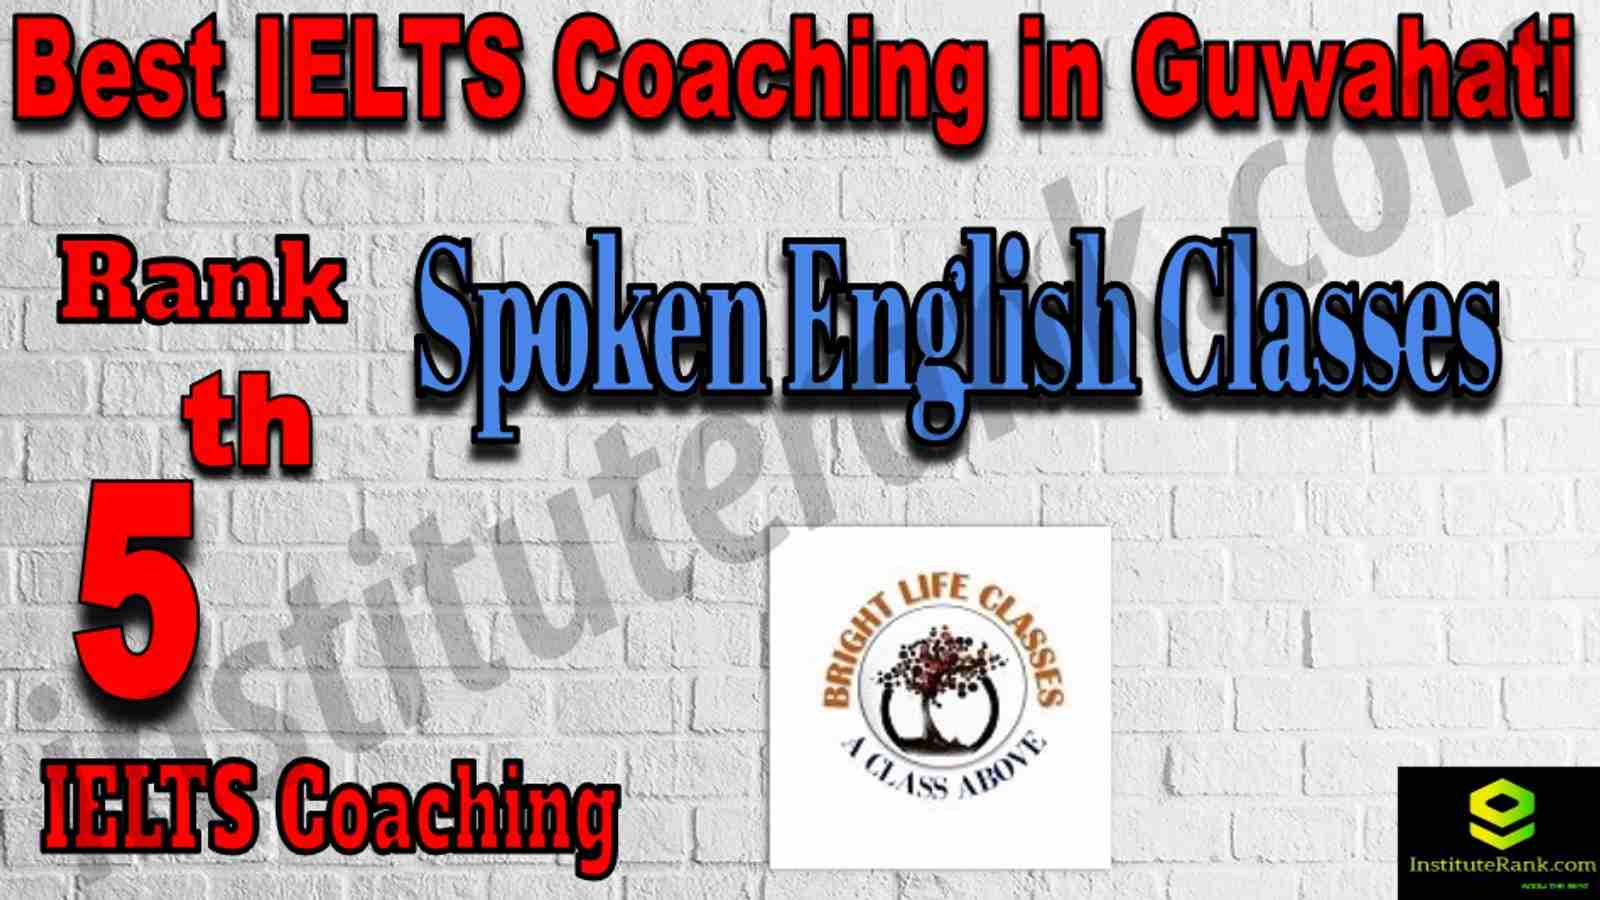 5th Best IELTS Coaching in Guwahati